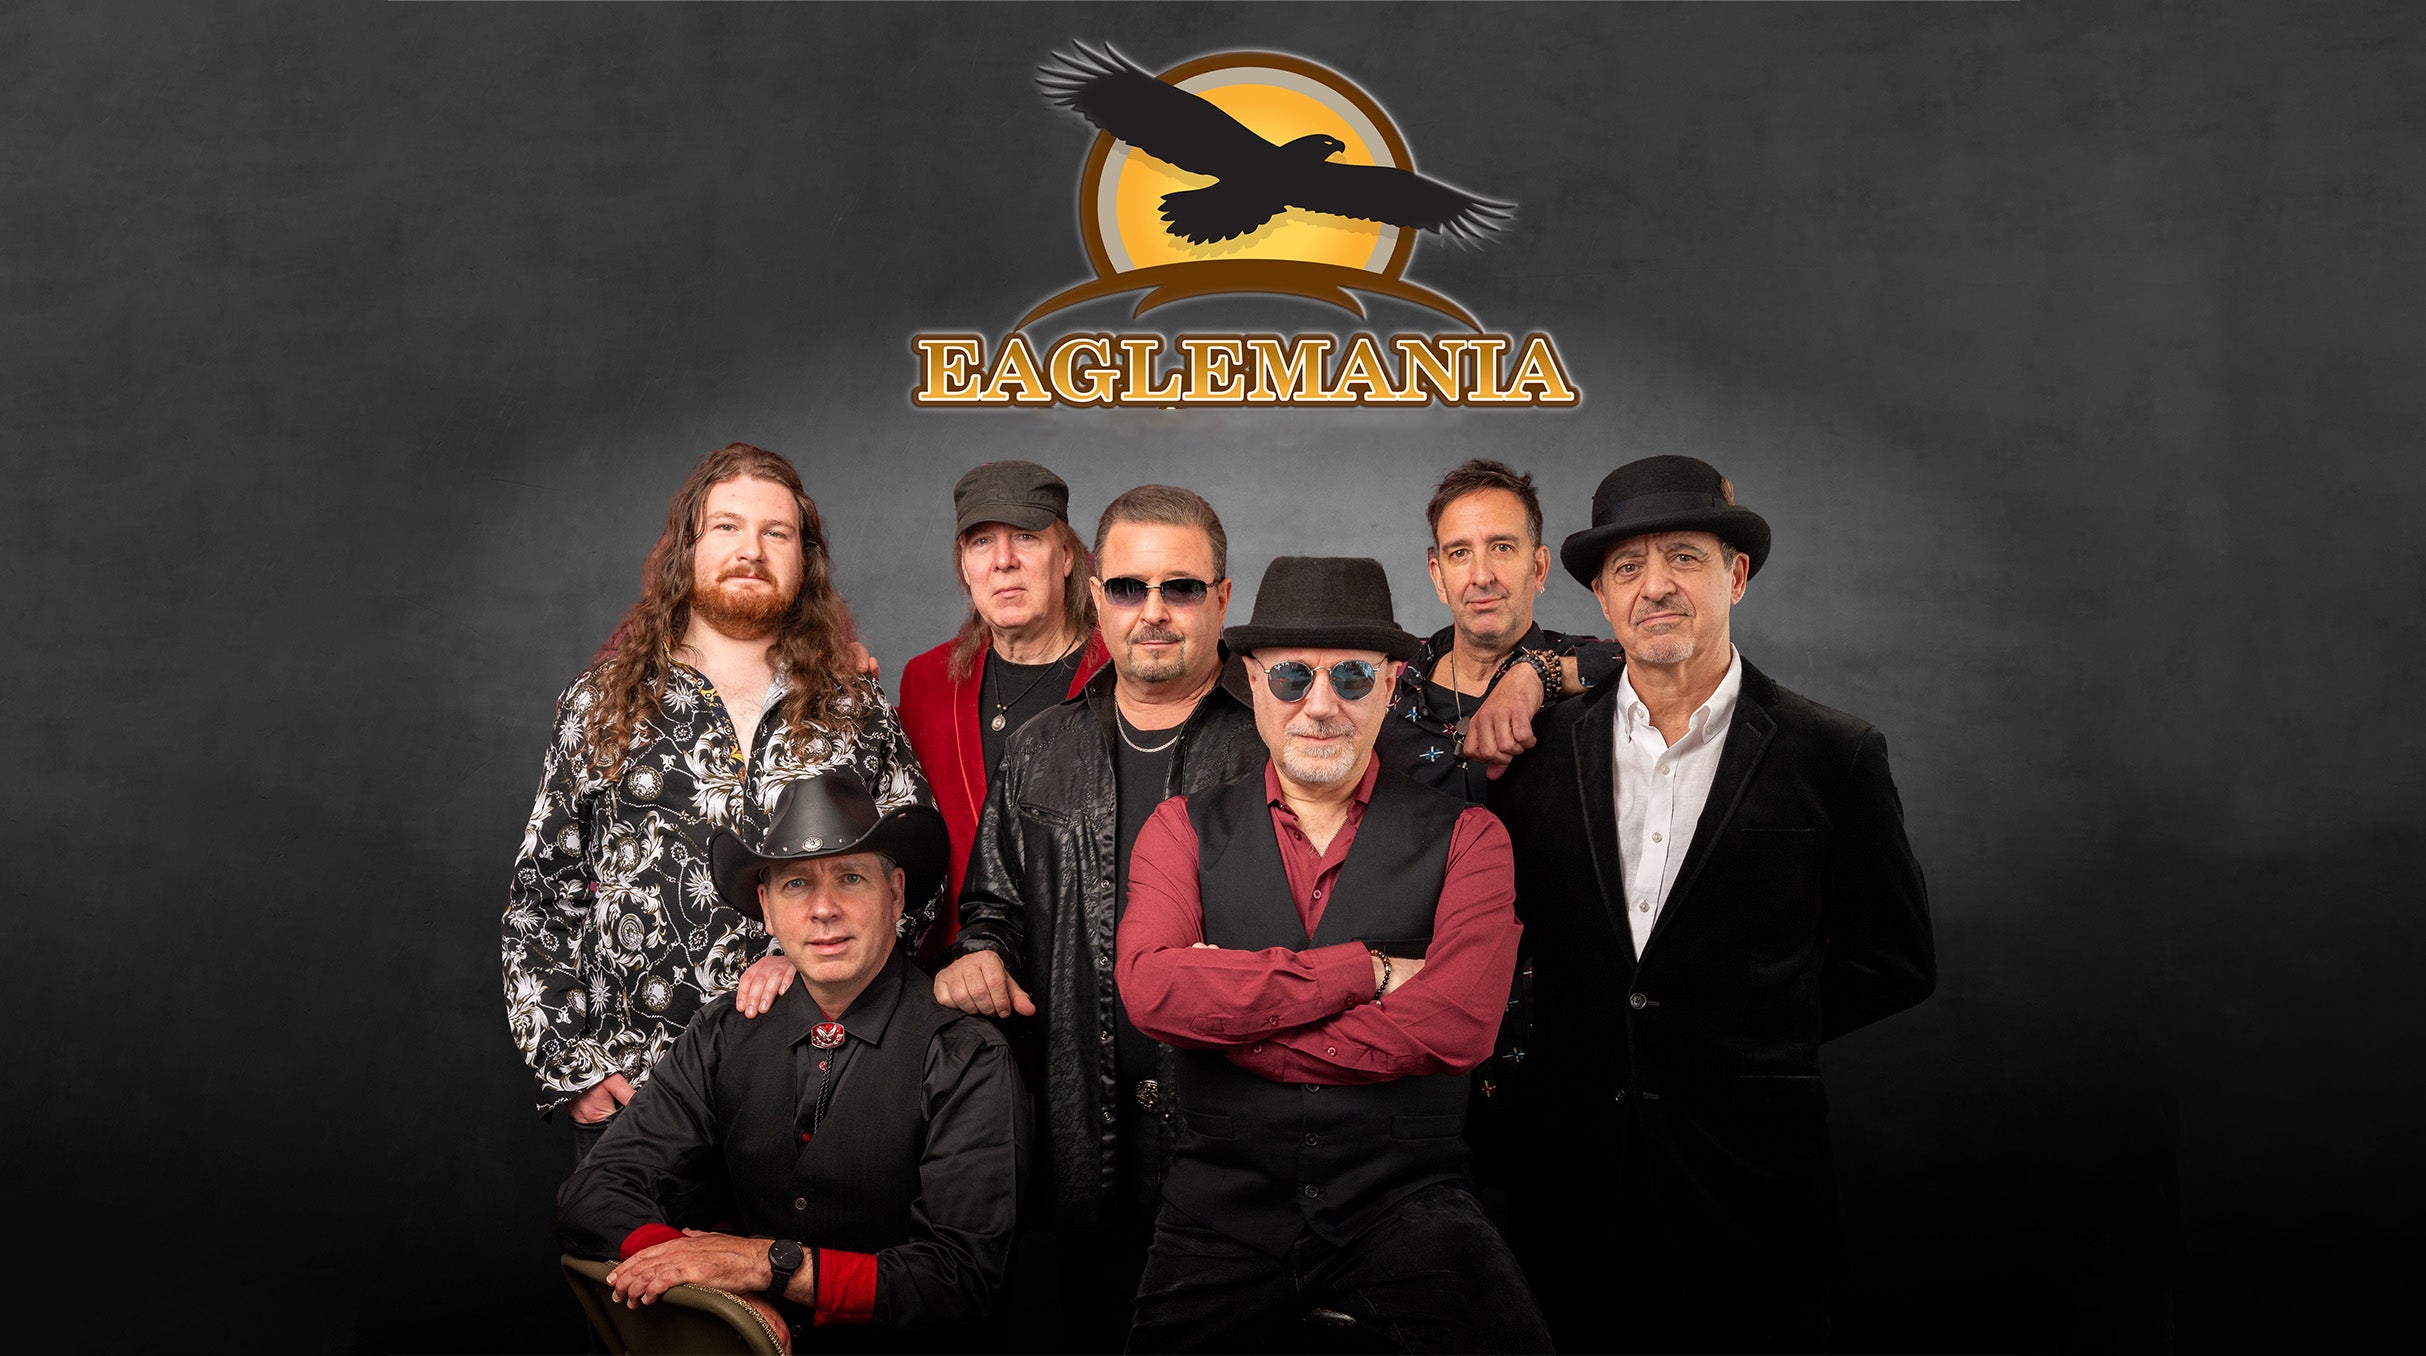 Eaglemania: World's Greatest Eagles Tribute